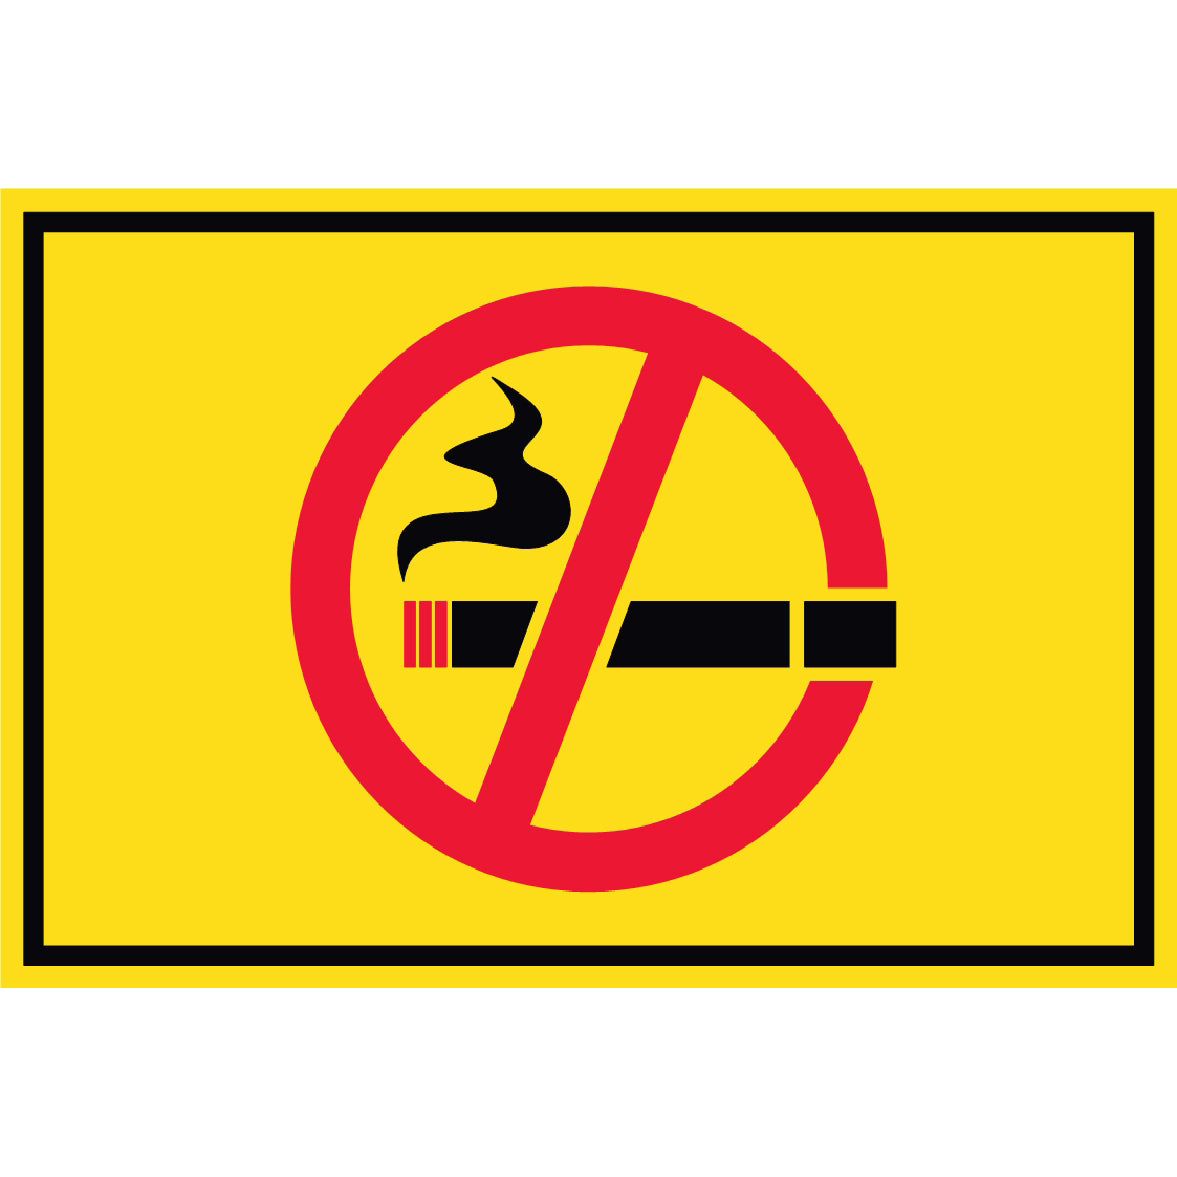 Zigarette in Verbots-Kreis Schild